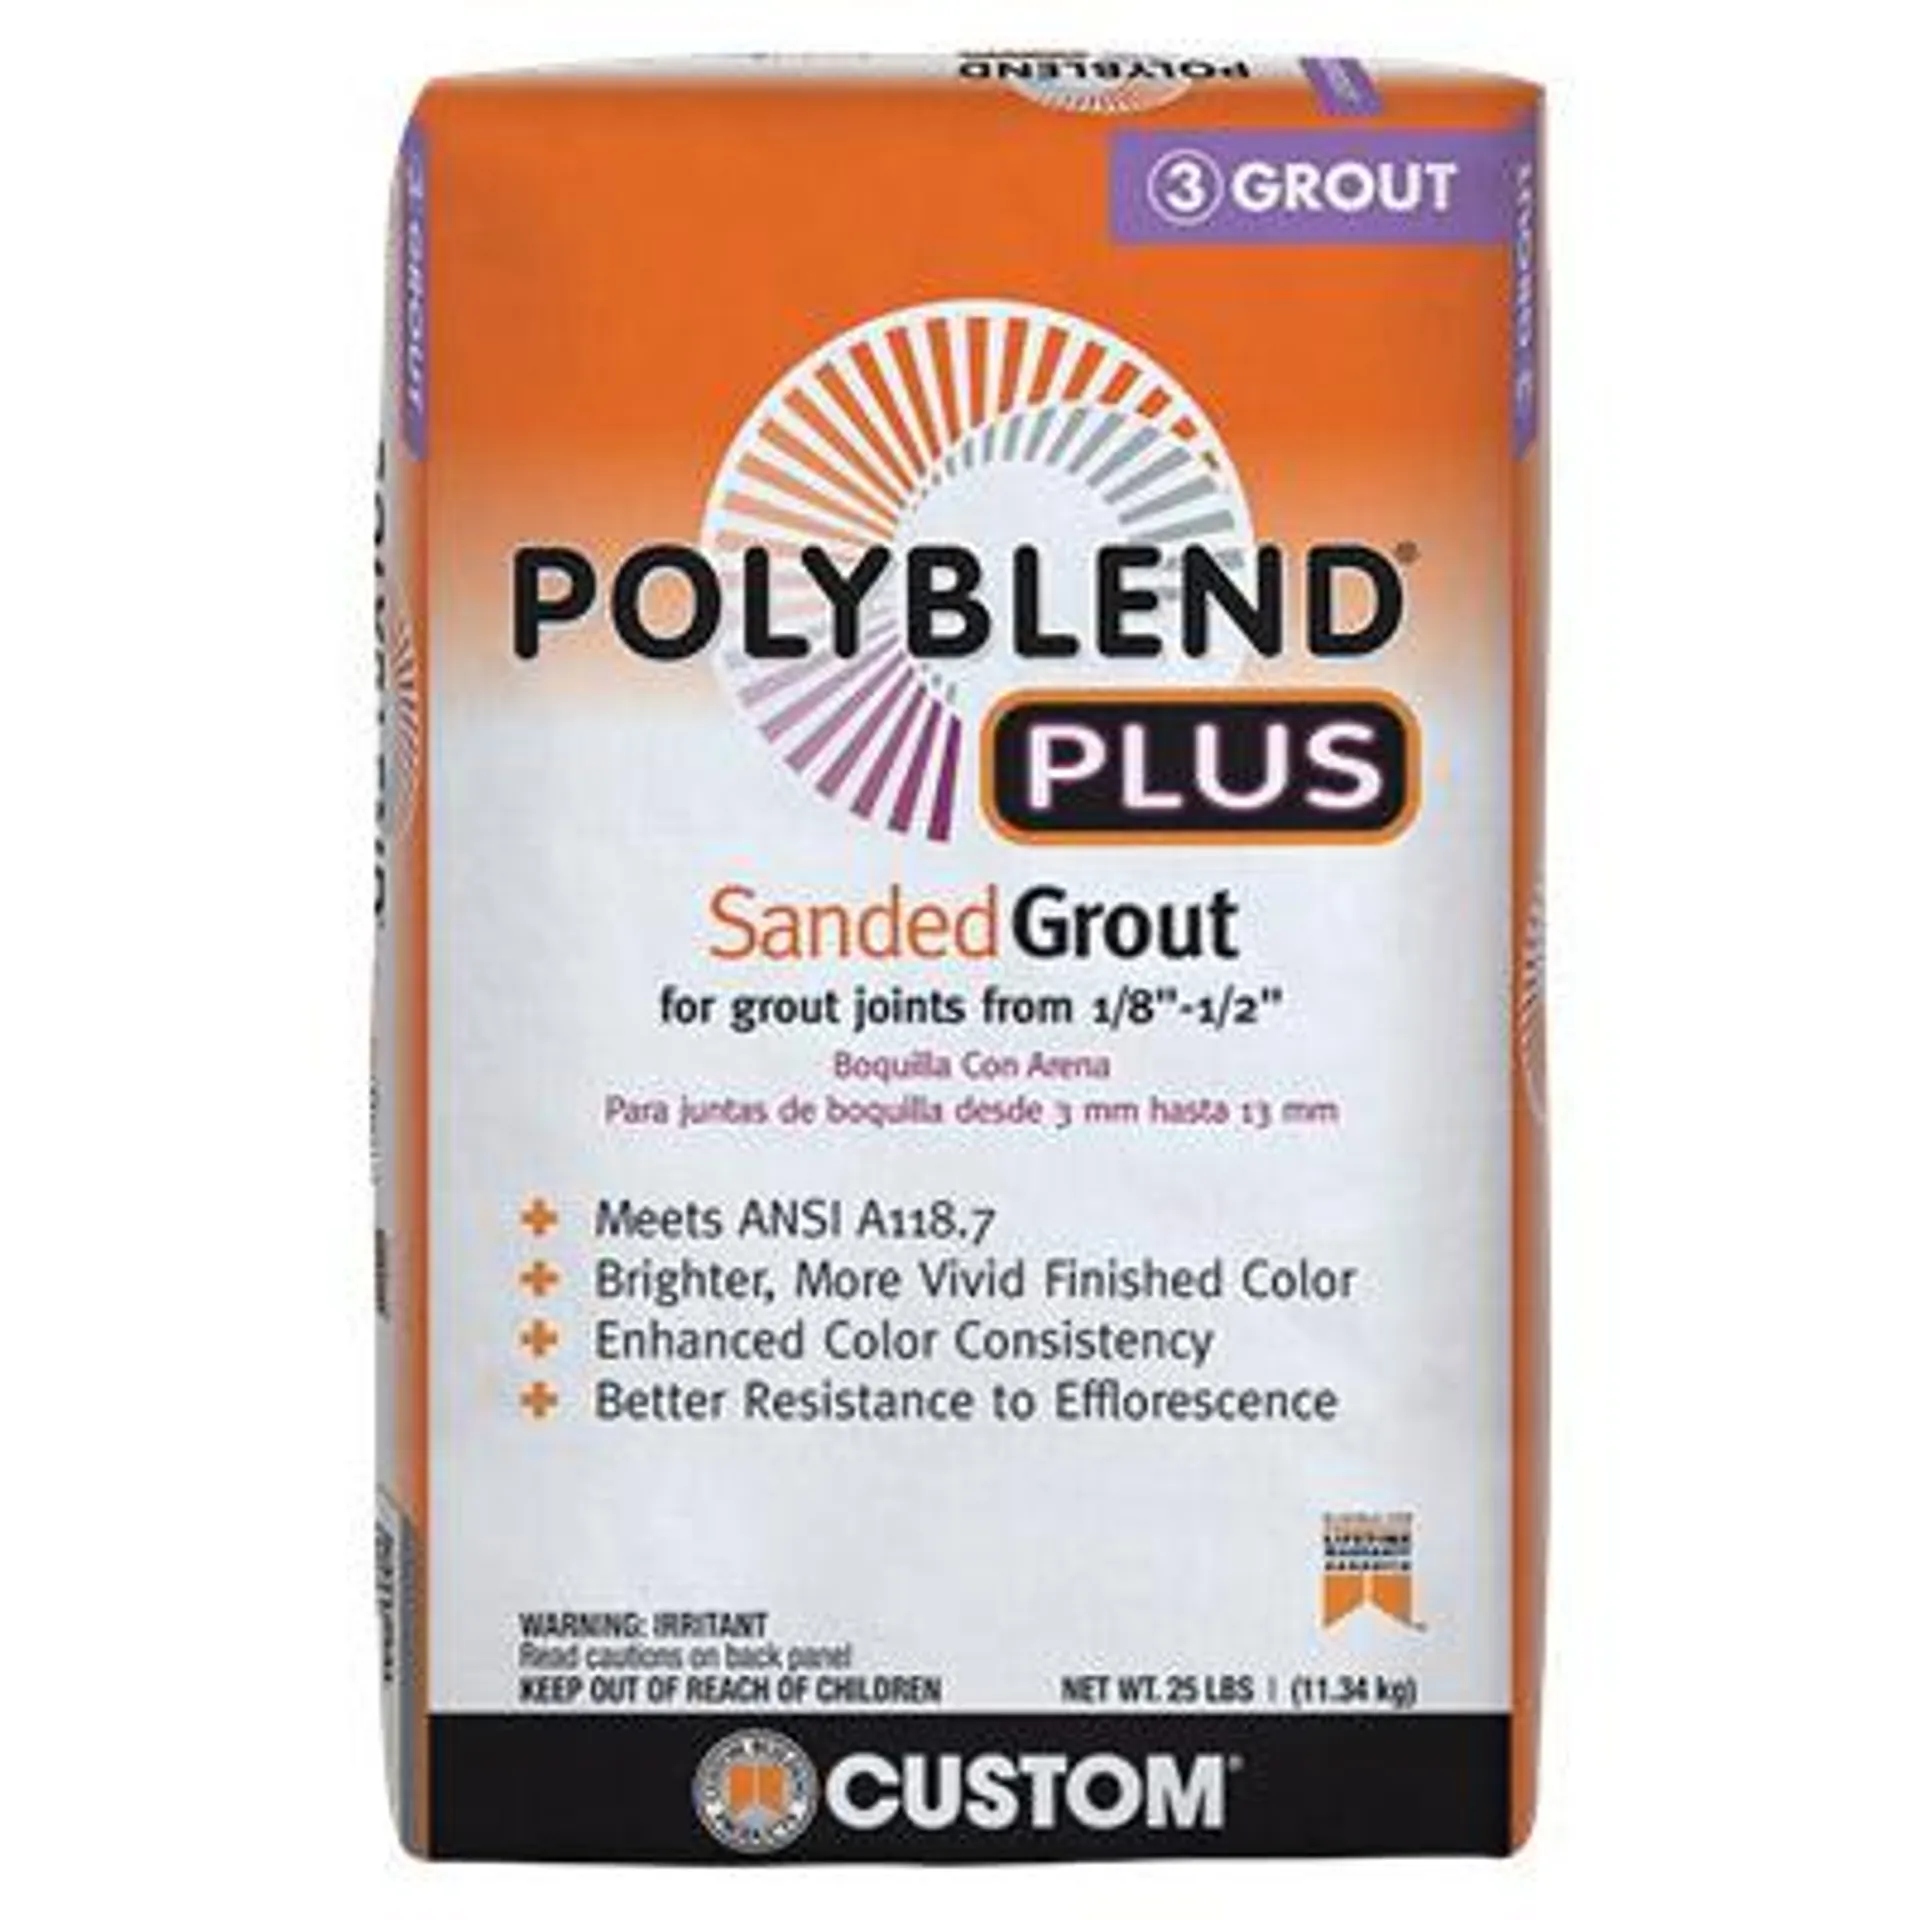 Polyblend Plus PBPG64025 Sanded Grout, Powder, Characteristic, Arctic White, 25 lb Bag